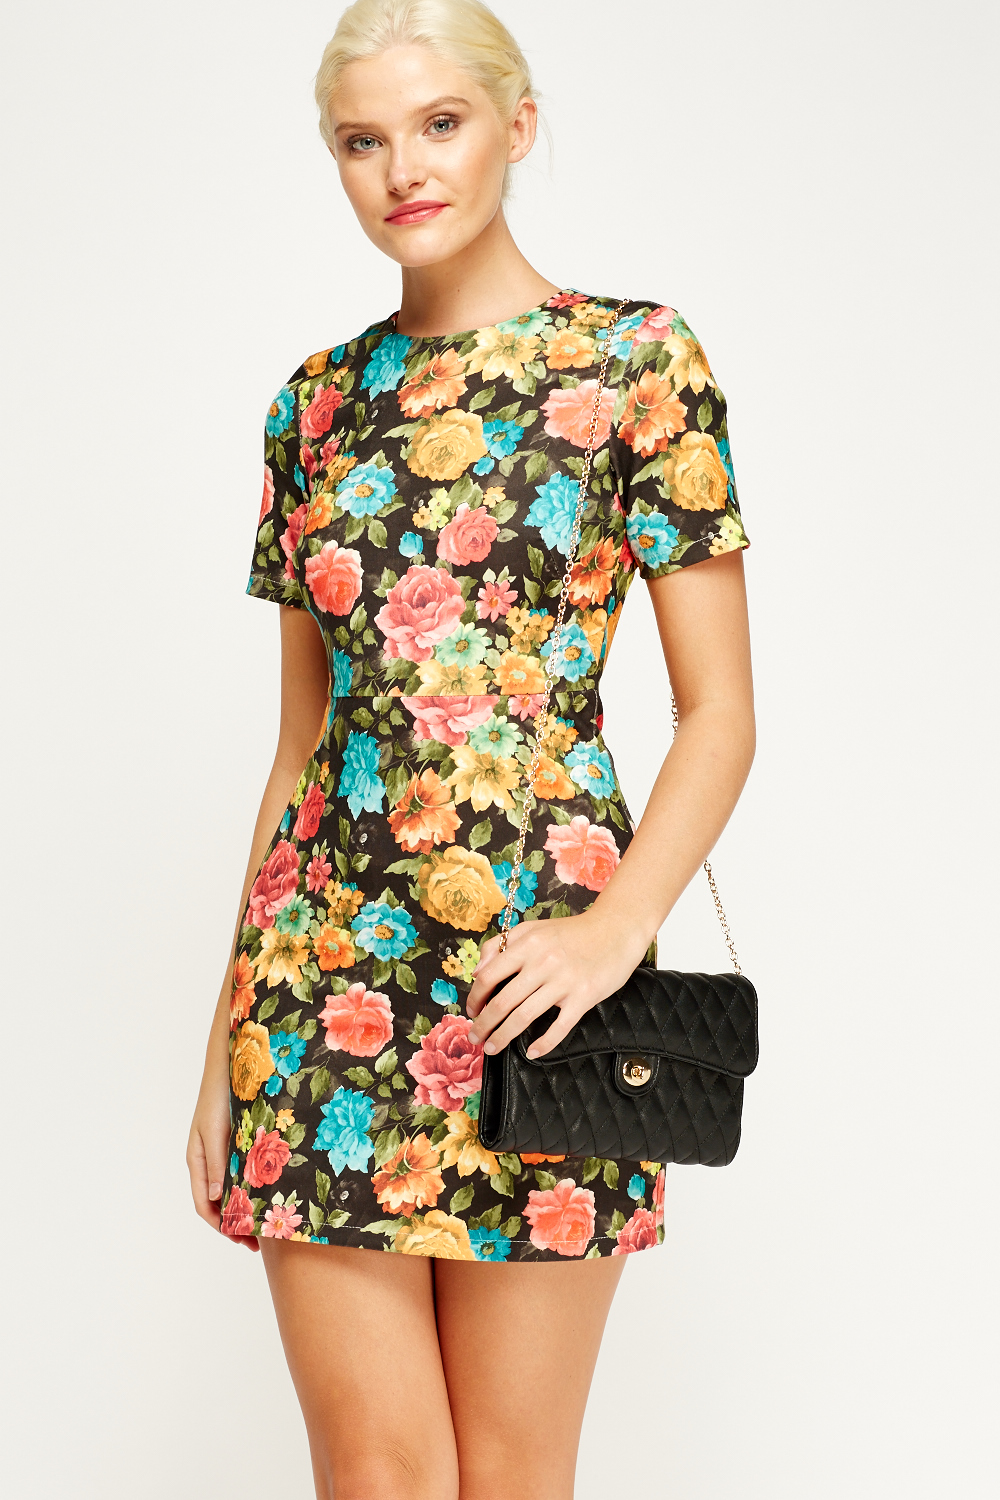 Floral Mini Bodycon Dress - Just $7